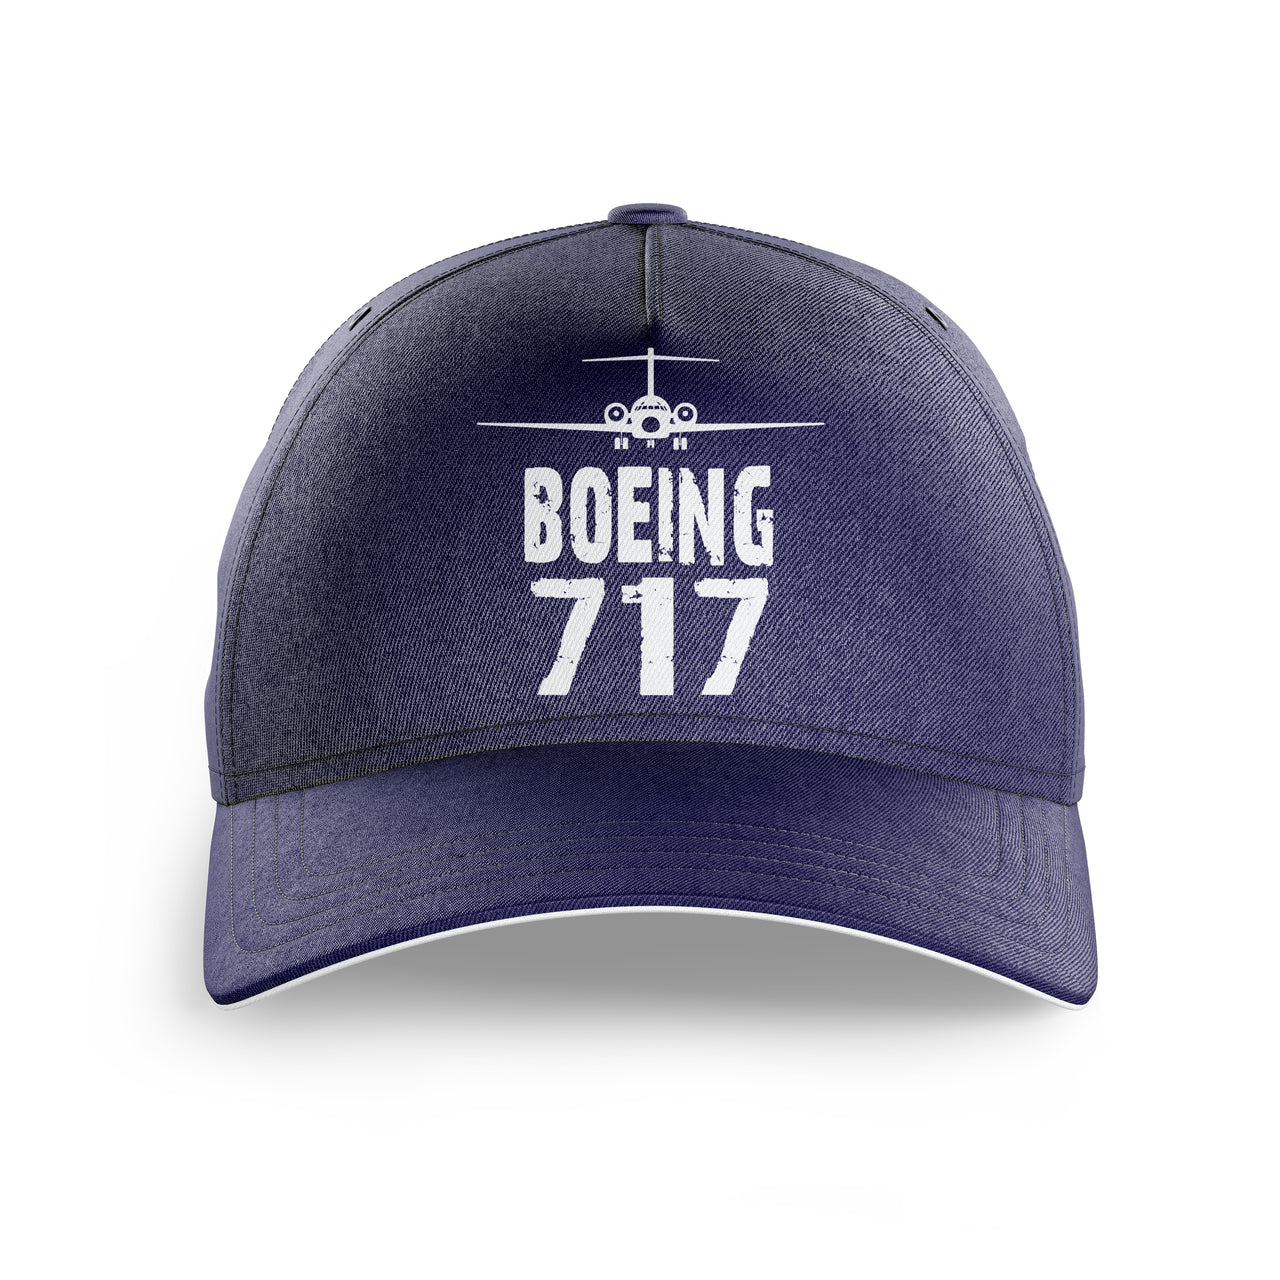 Boeing 717 & Plane Printed Hats